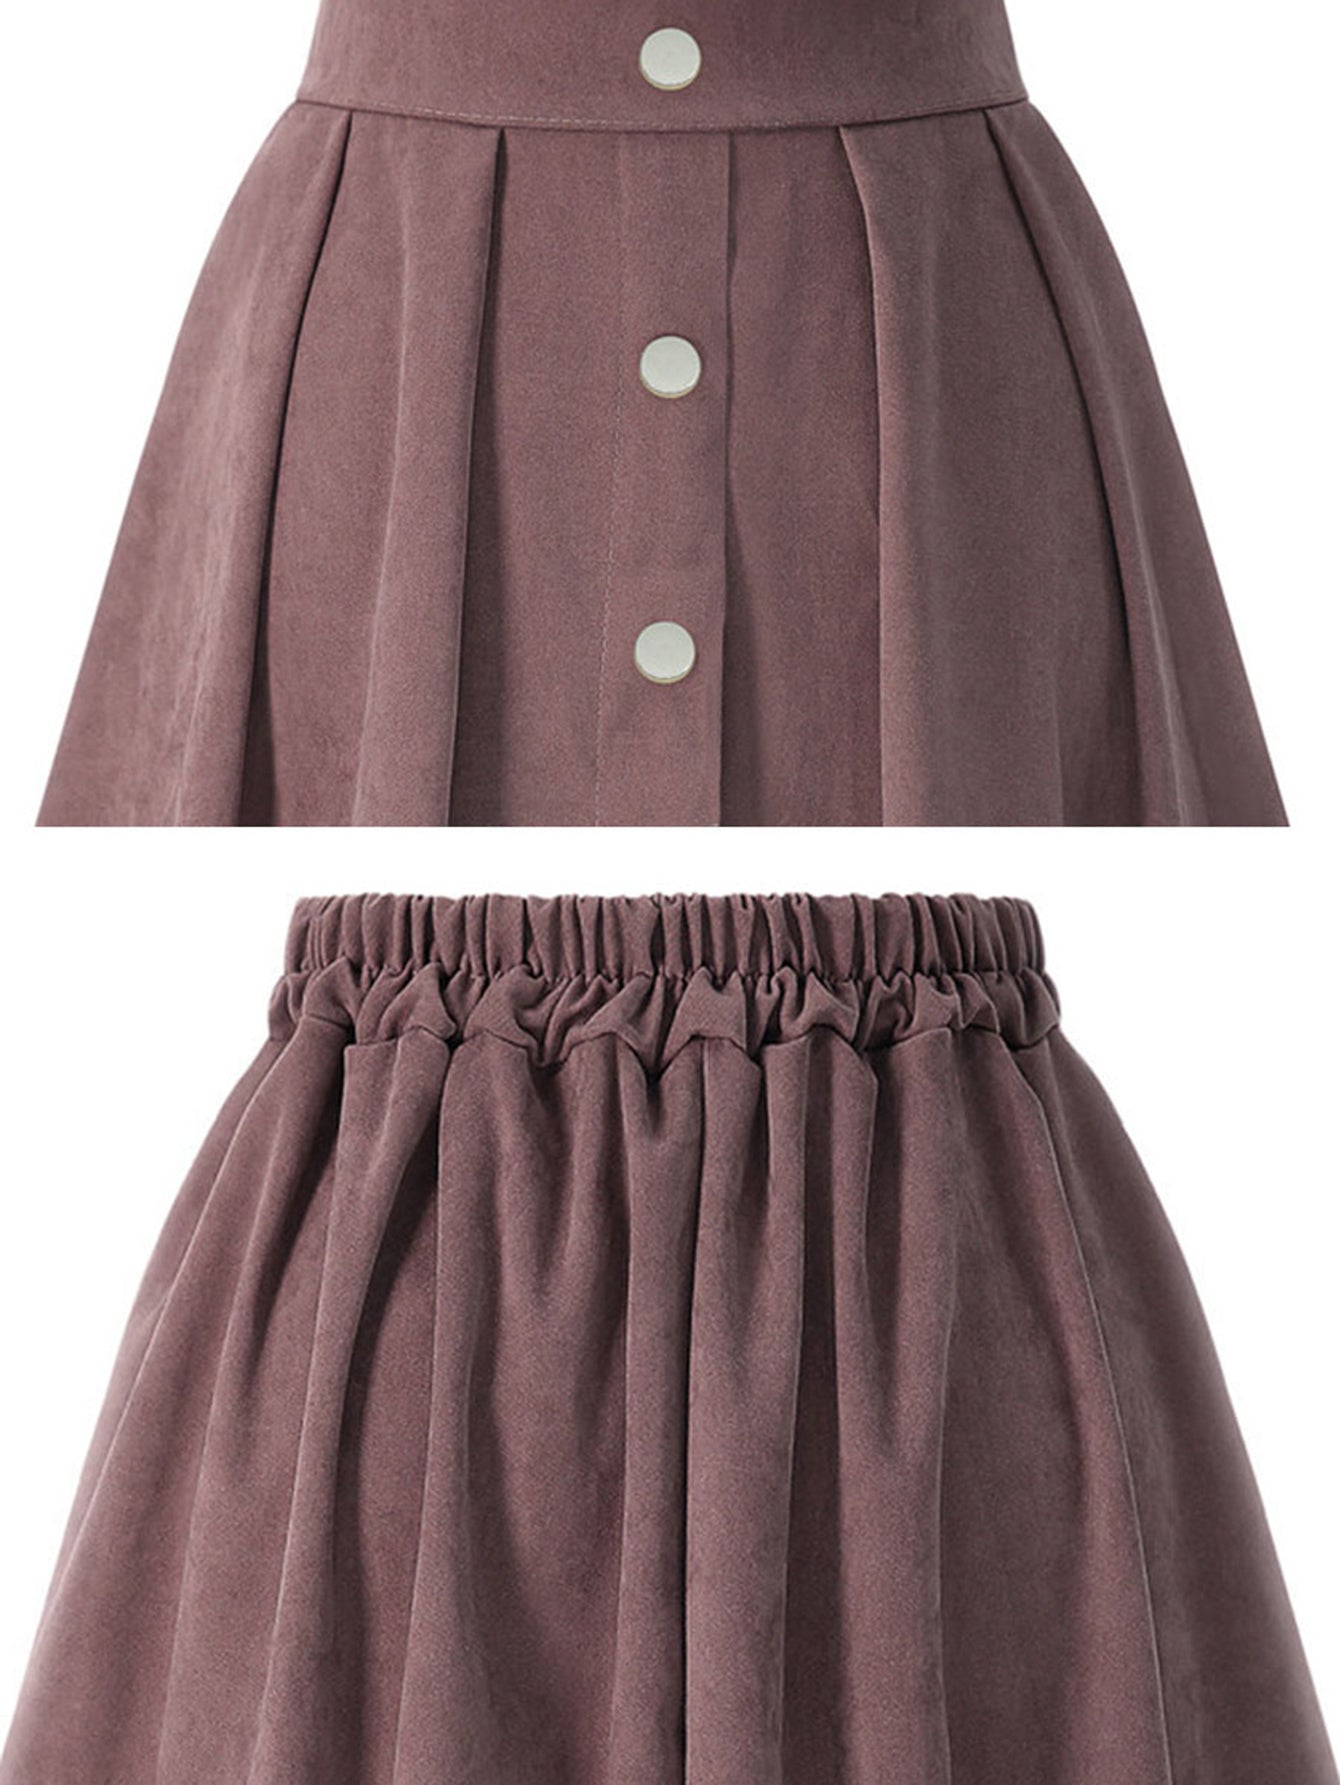 Elastic waist button solid color pleated skirt Sai Feel